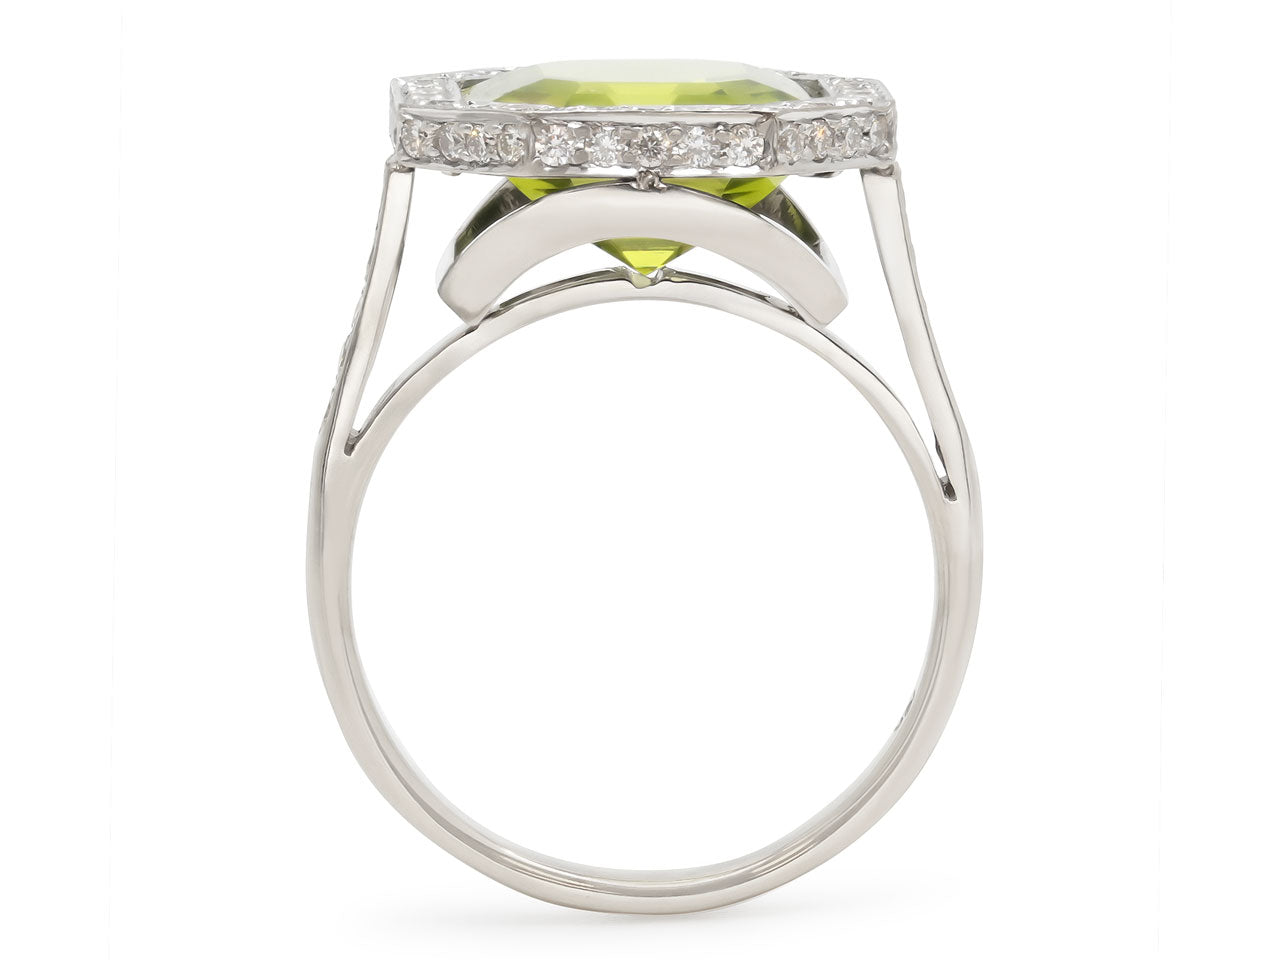 Beladora 'Bespoke' Peridot and Diamond Ring in 18K White Gold